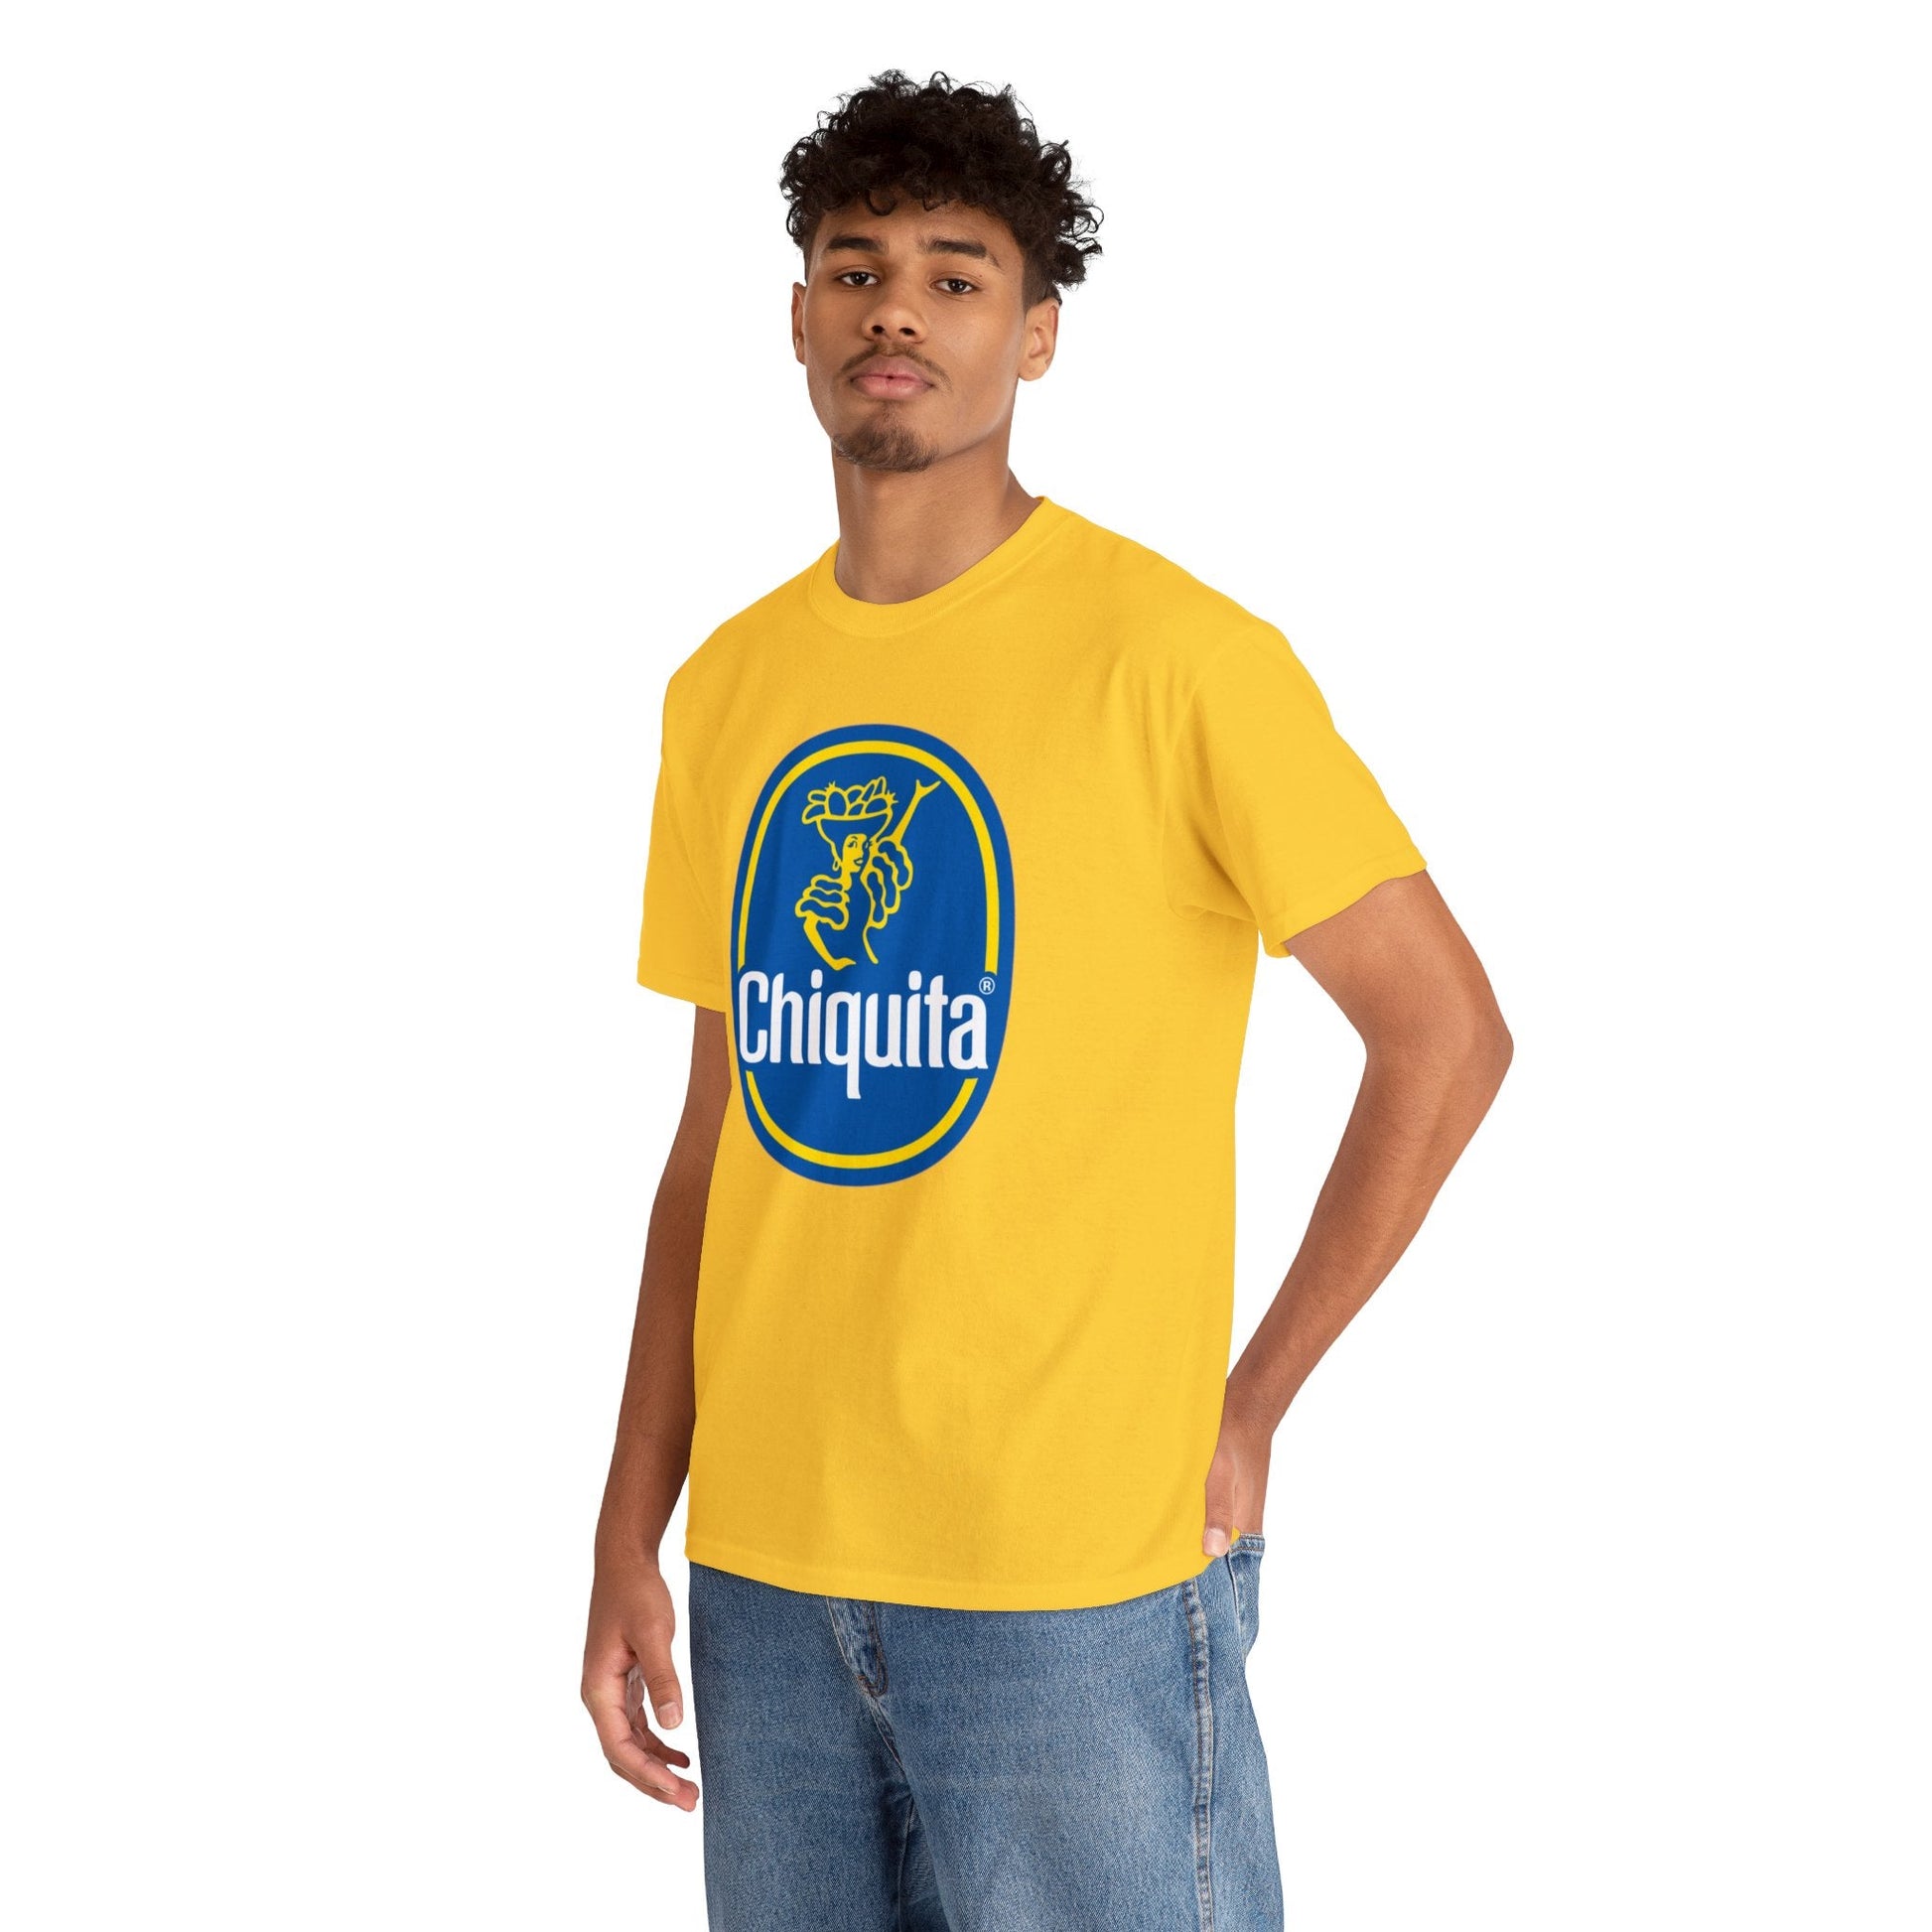 Chiquita Banana Essential T-Shirt - RetroTeeShop